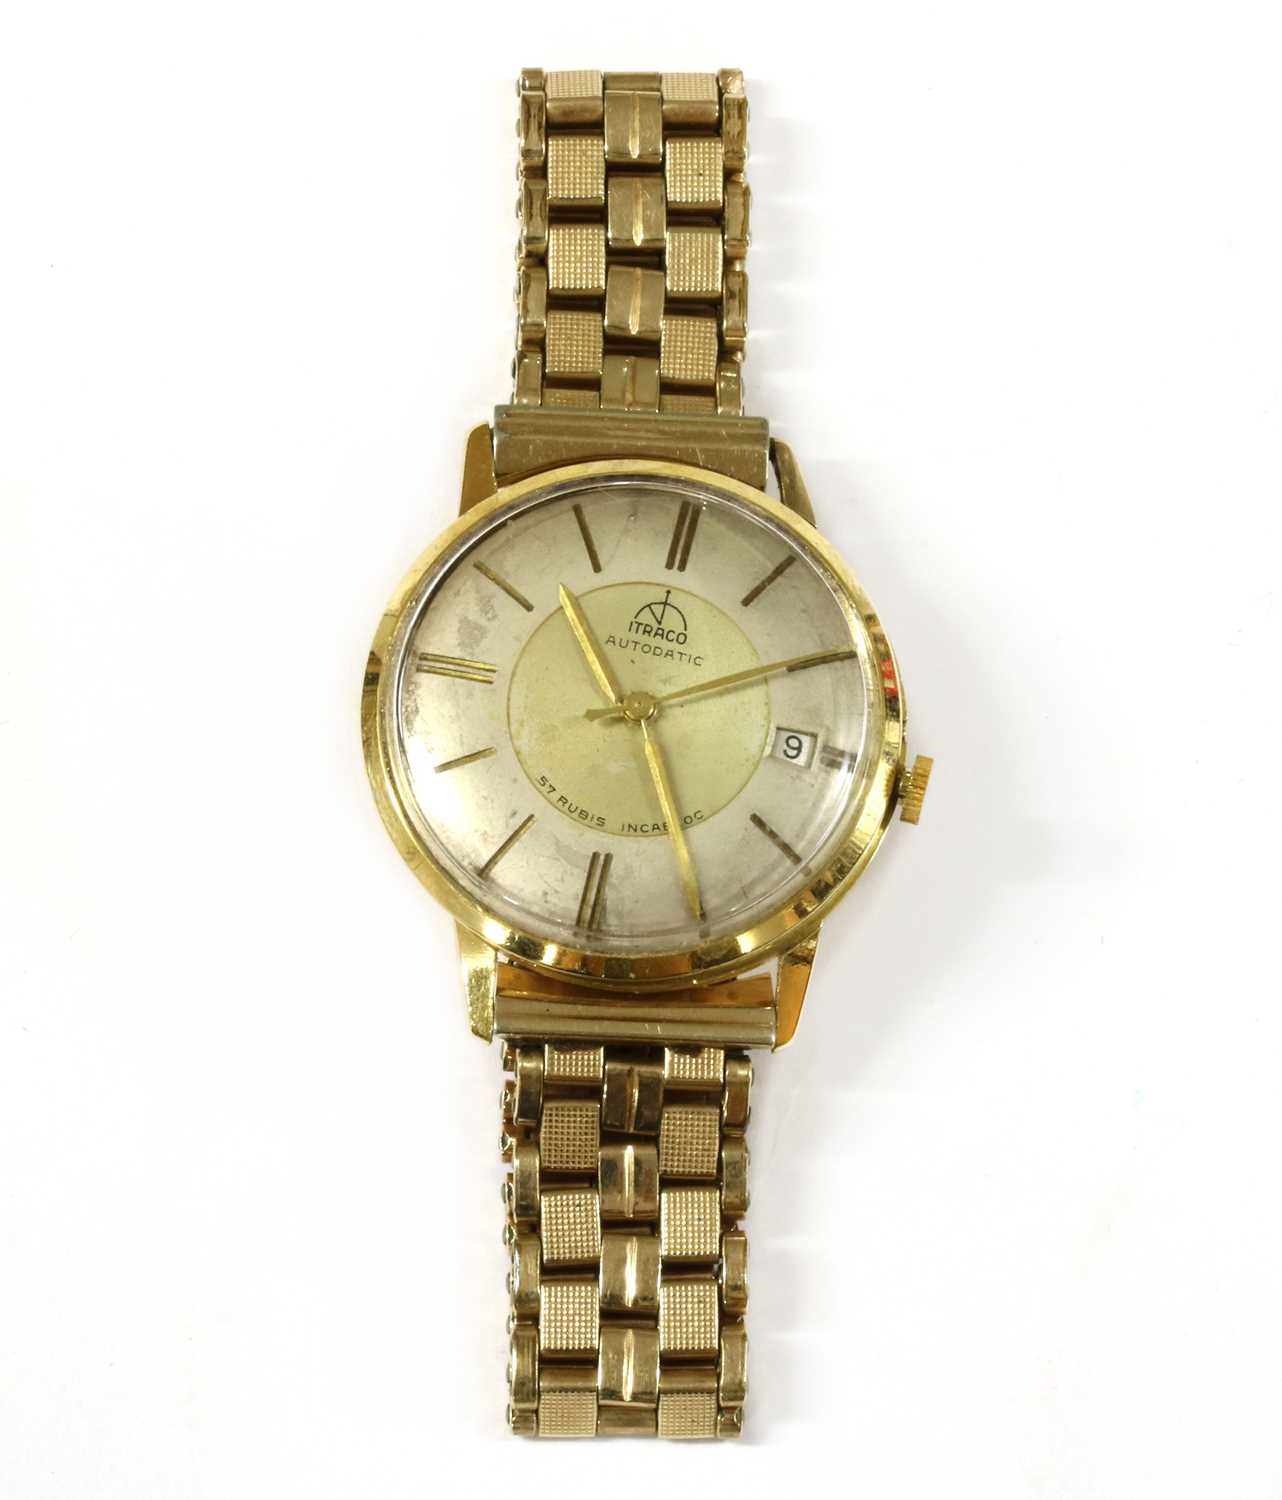 Lot 474 - A gentlemen's gold Itraco 'Autodatic' automatic bracelet watch